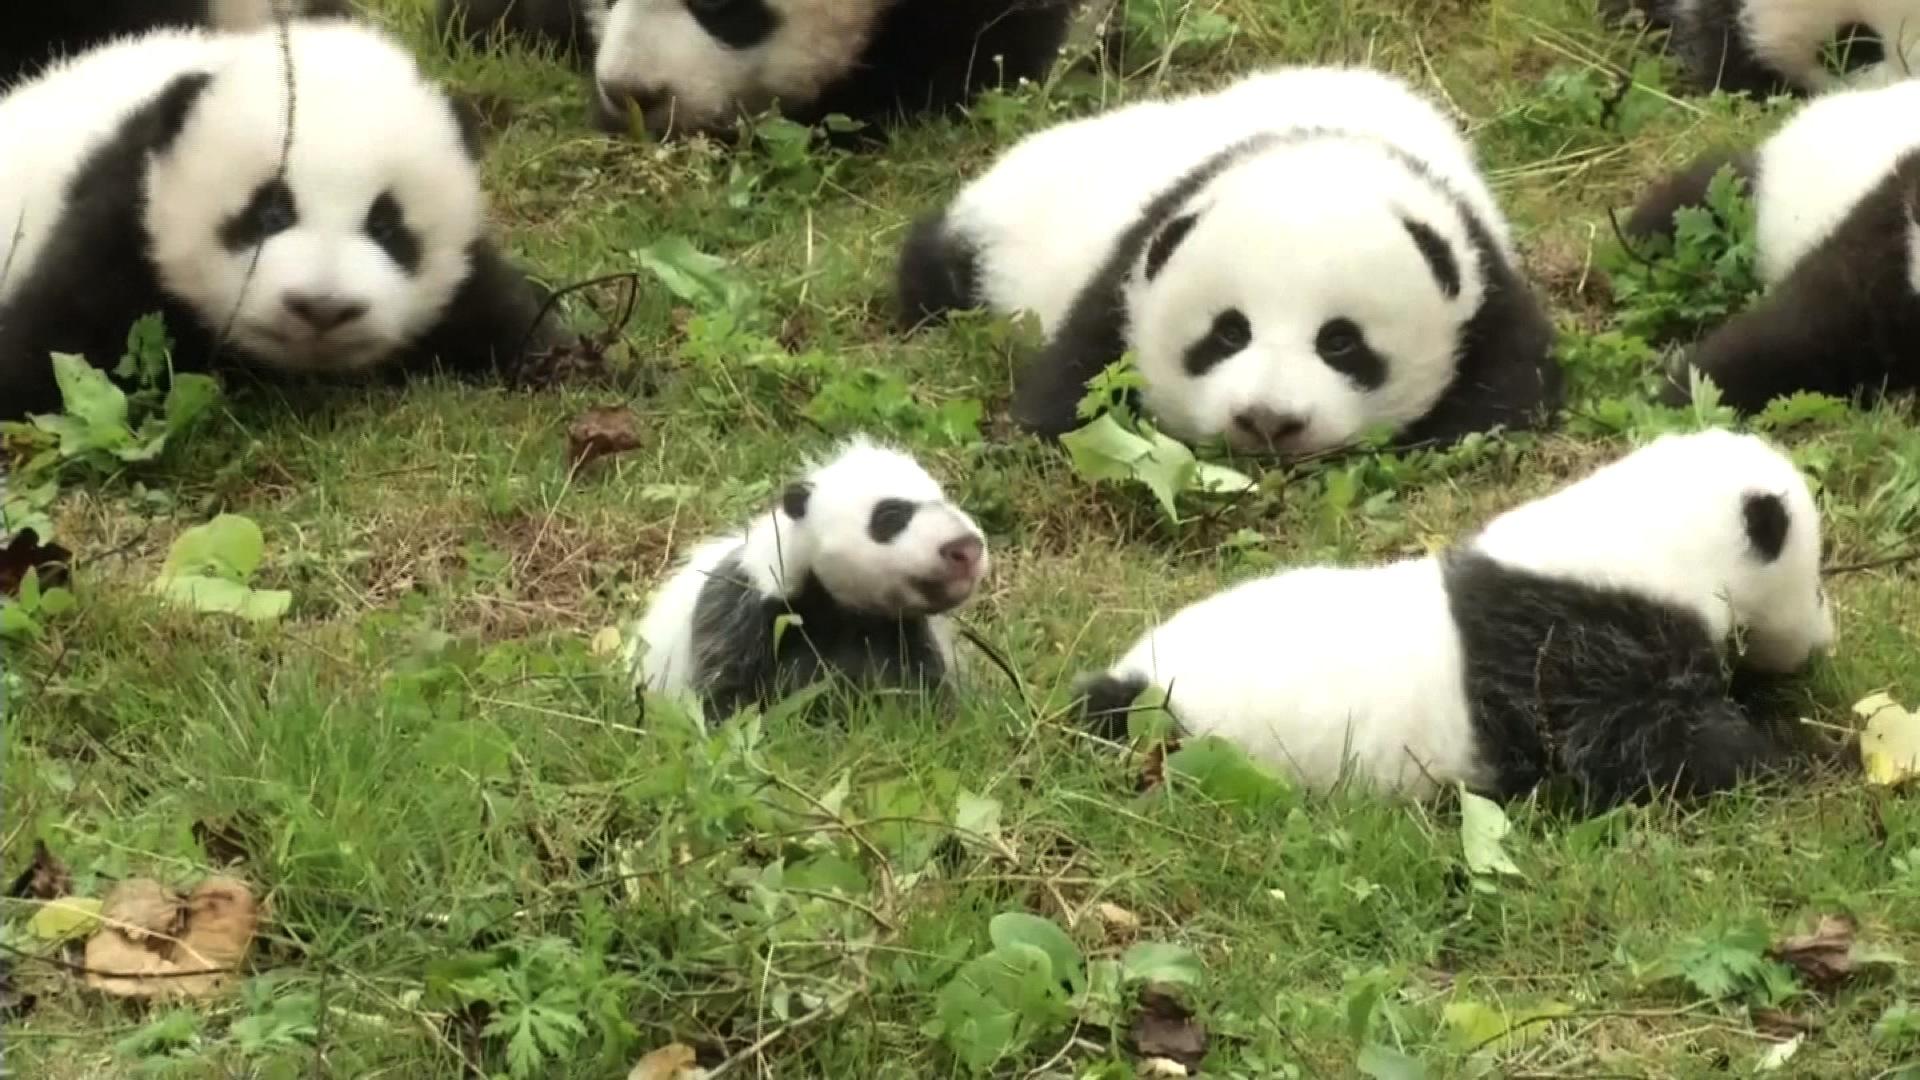 panda cubs make adorable debut